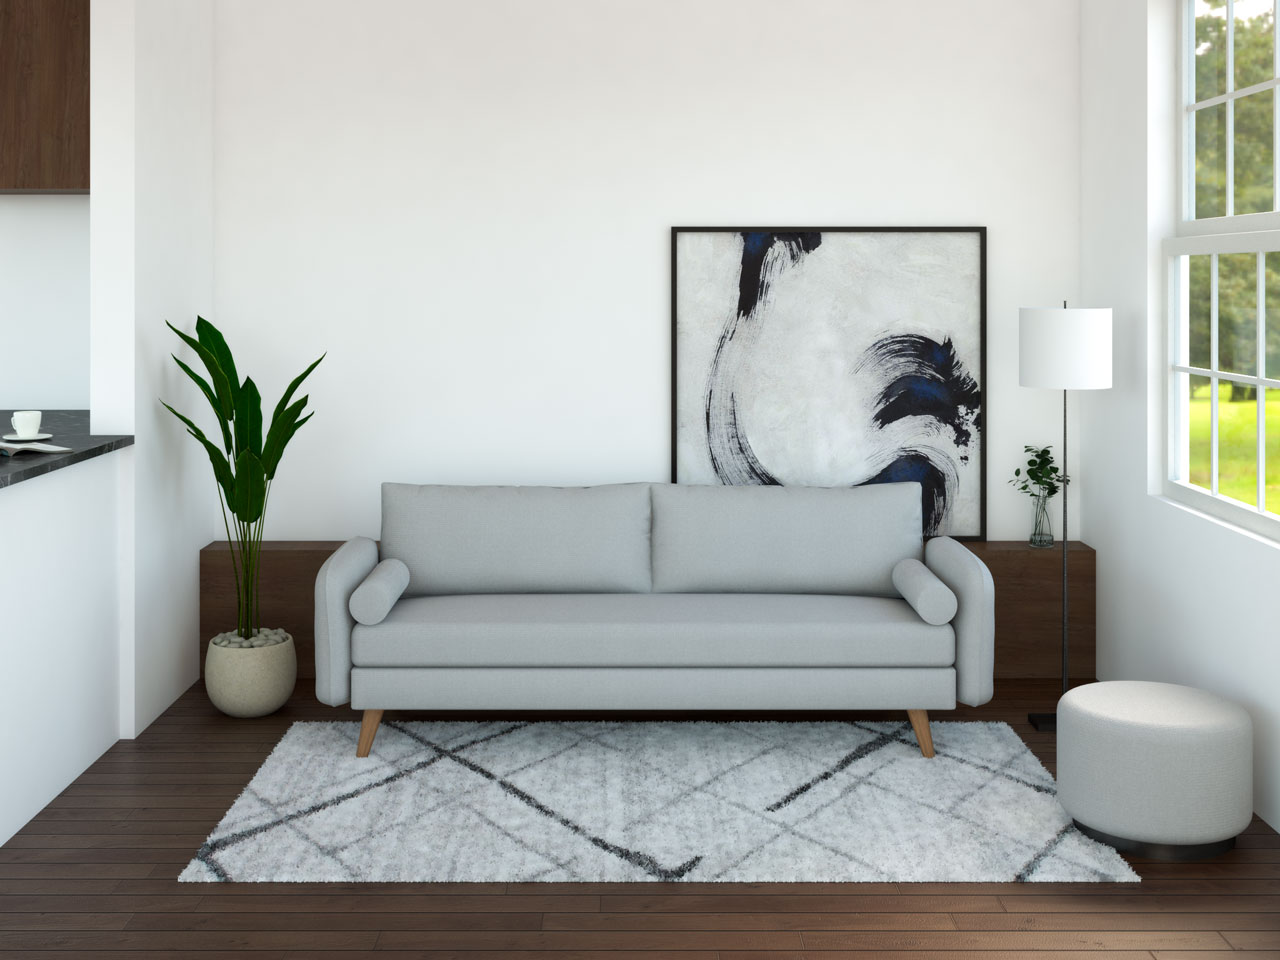 7 Furniture Colors That Enhance Dark Wood Floors - roomdsign.com